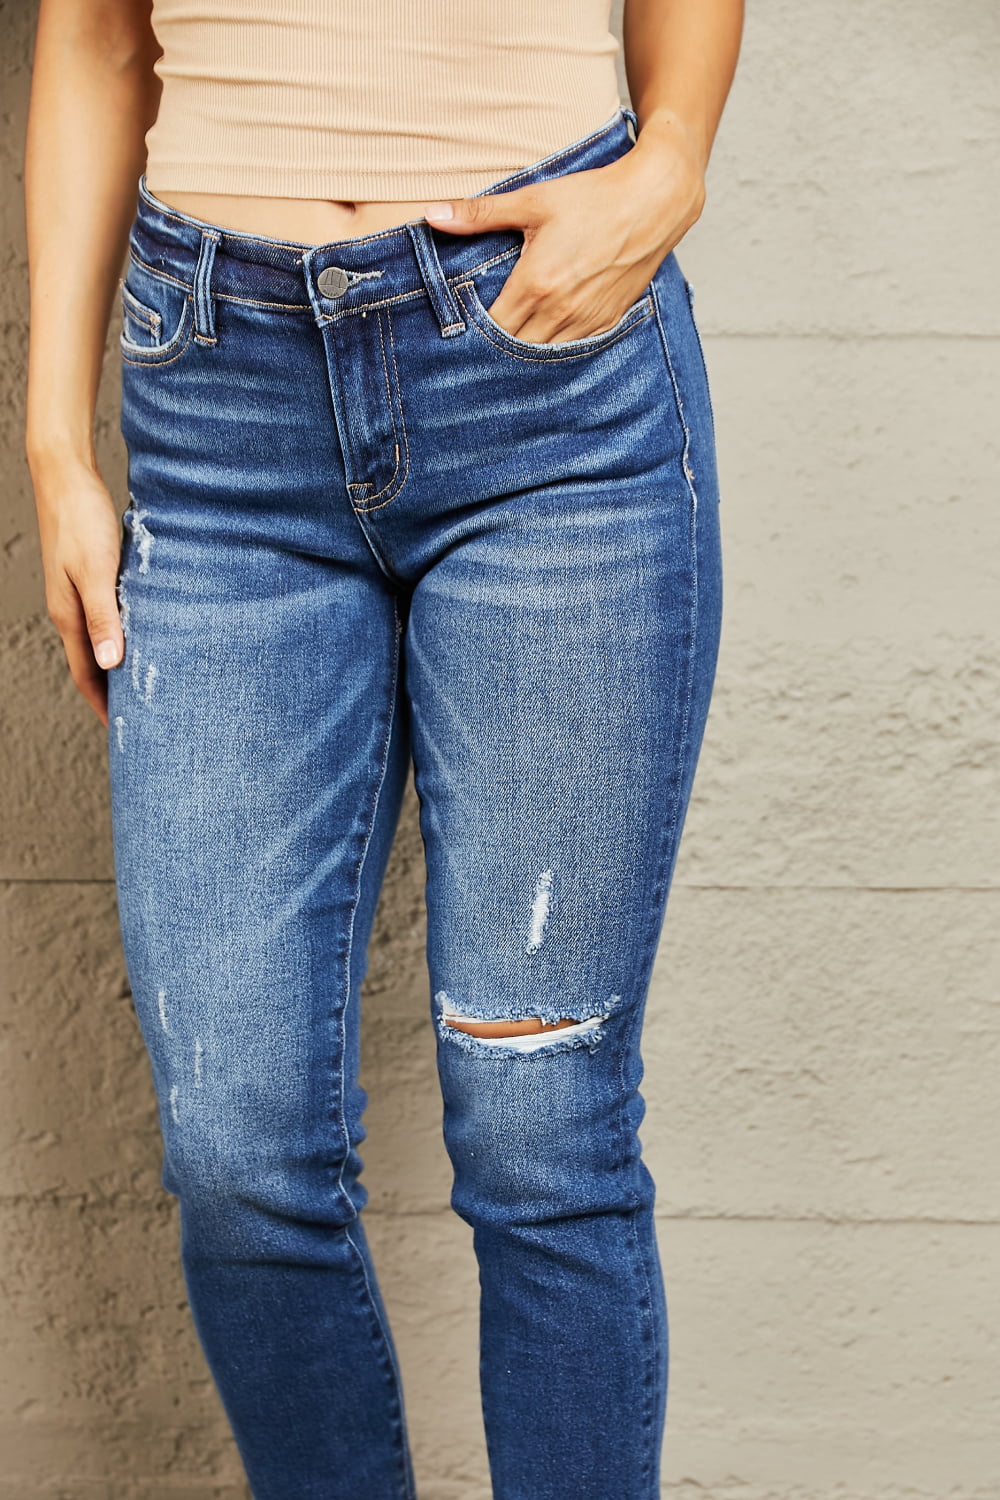 BAYEAS Mid Rise Distressed Slim Jeans - Alonna's Legging Land